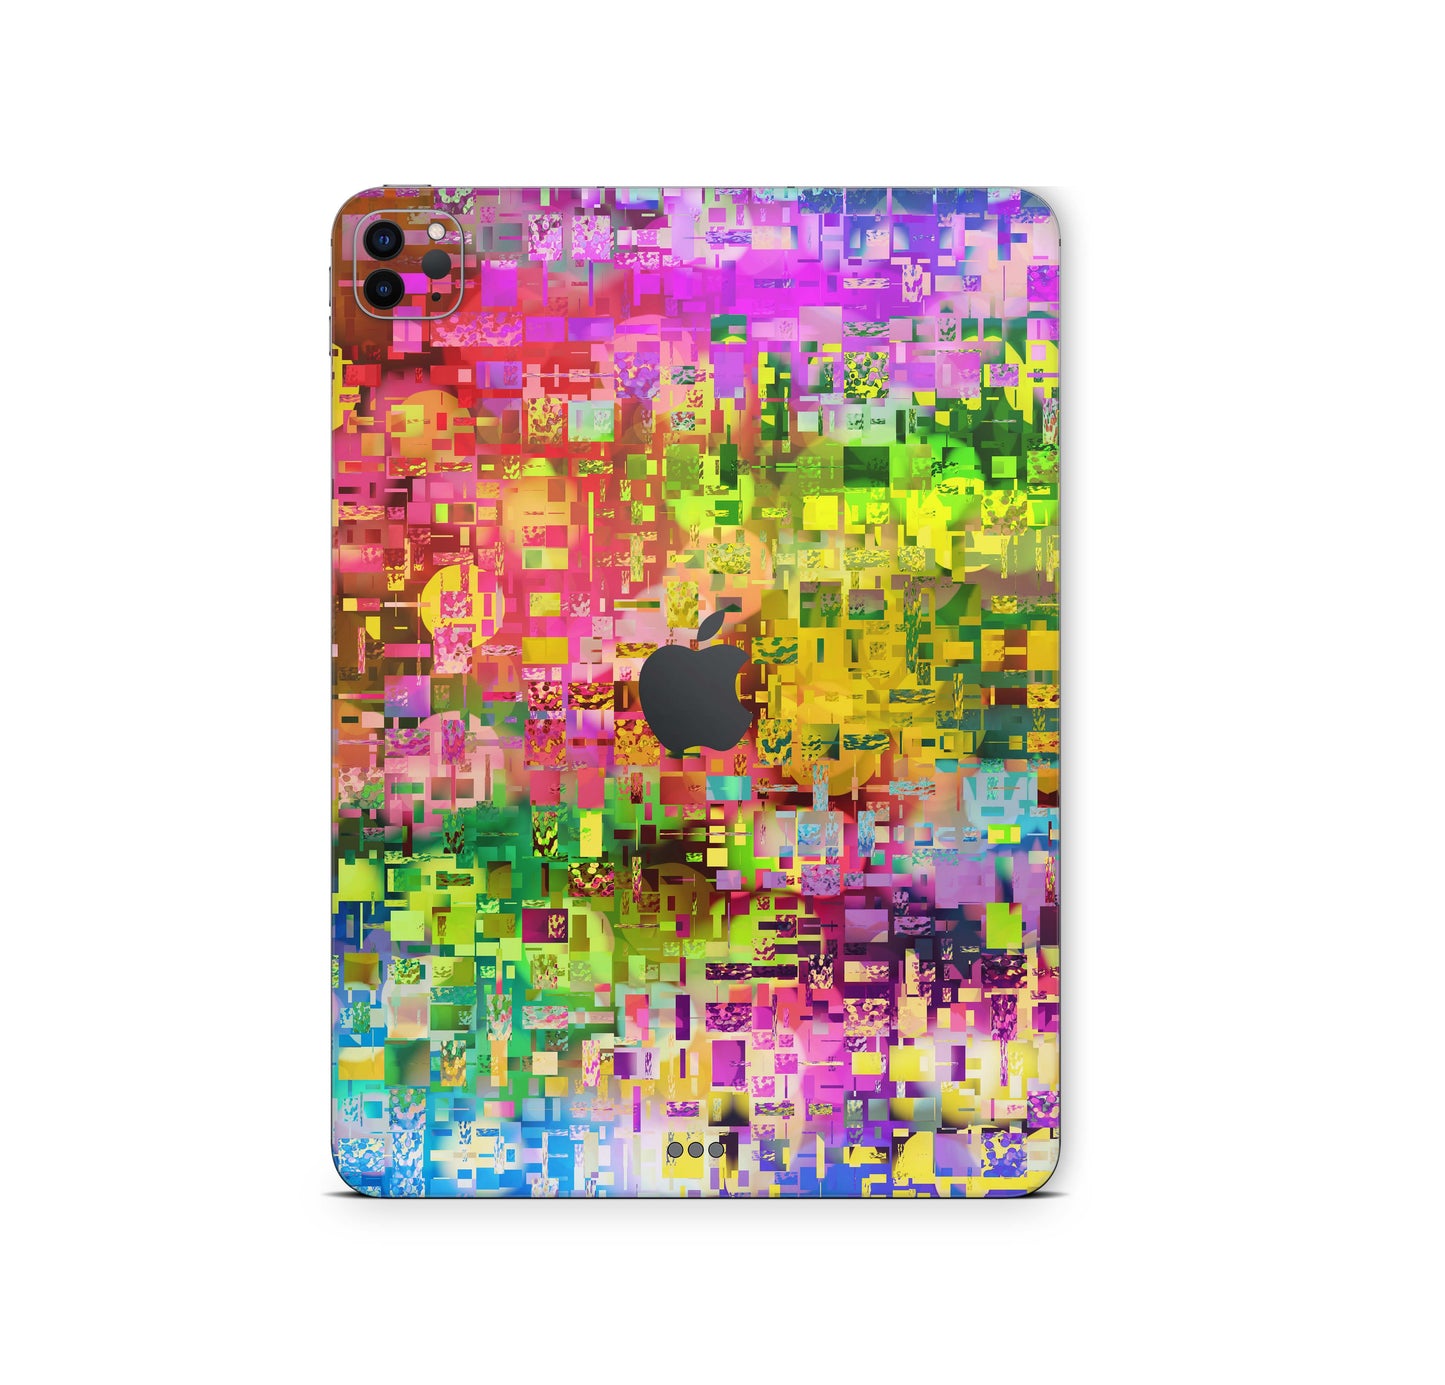 iPad Pro Skin 12,9 3.Generation Design Cover Folie Vinyl Skins & Wraps Aufkleber Skins4u Abstract  